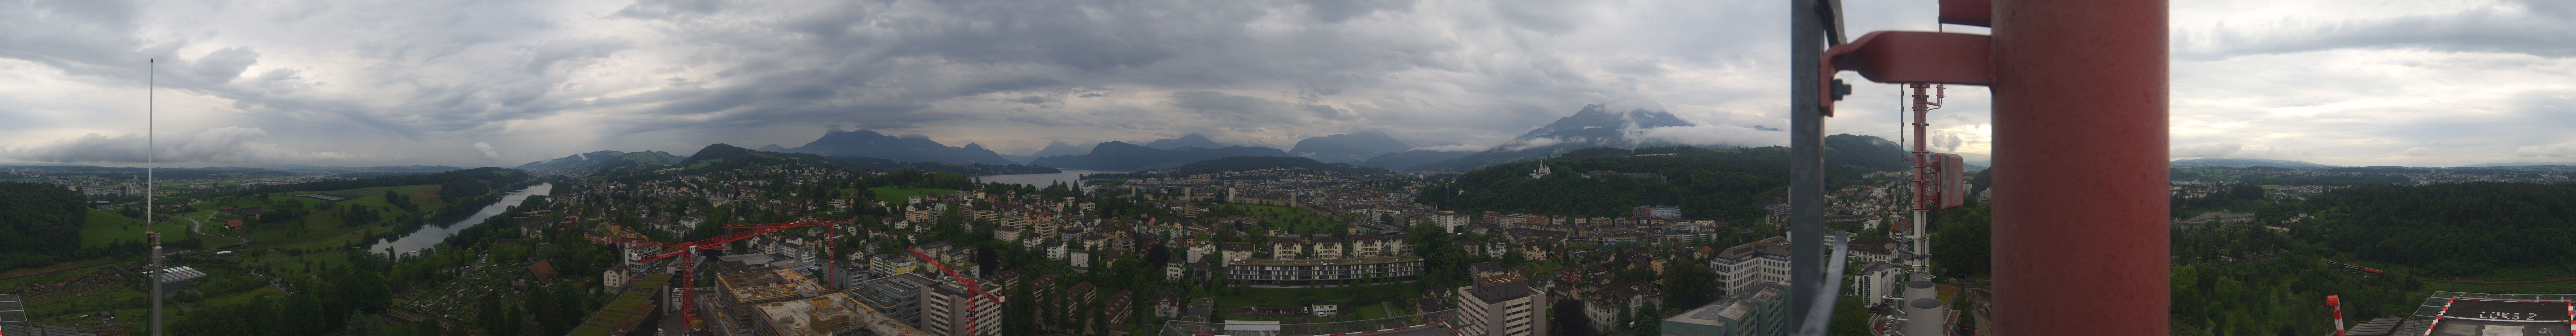 Luzern